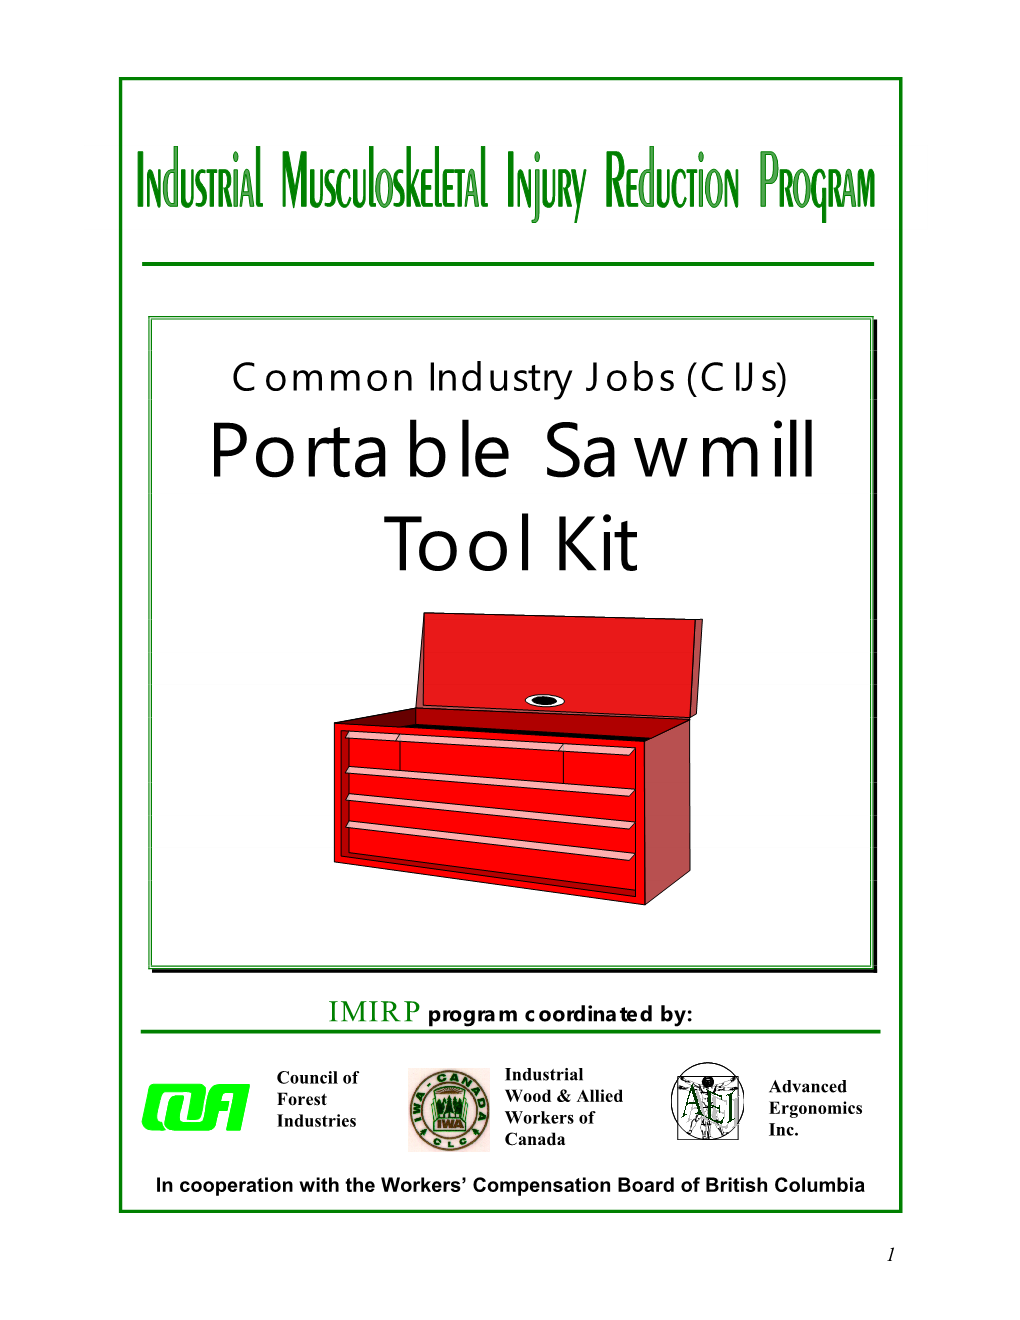 Portable Sawmill Operator